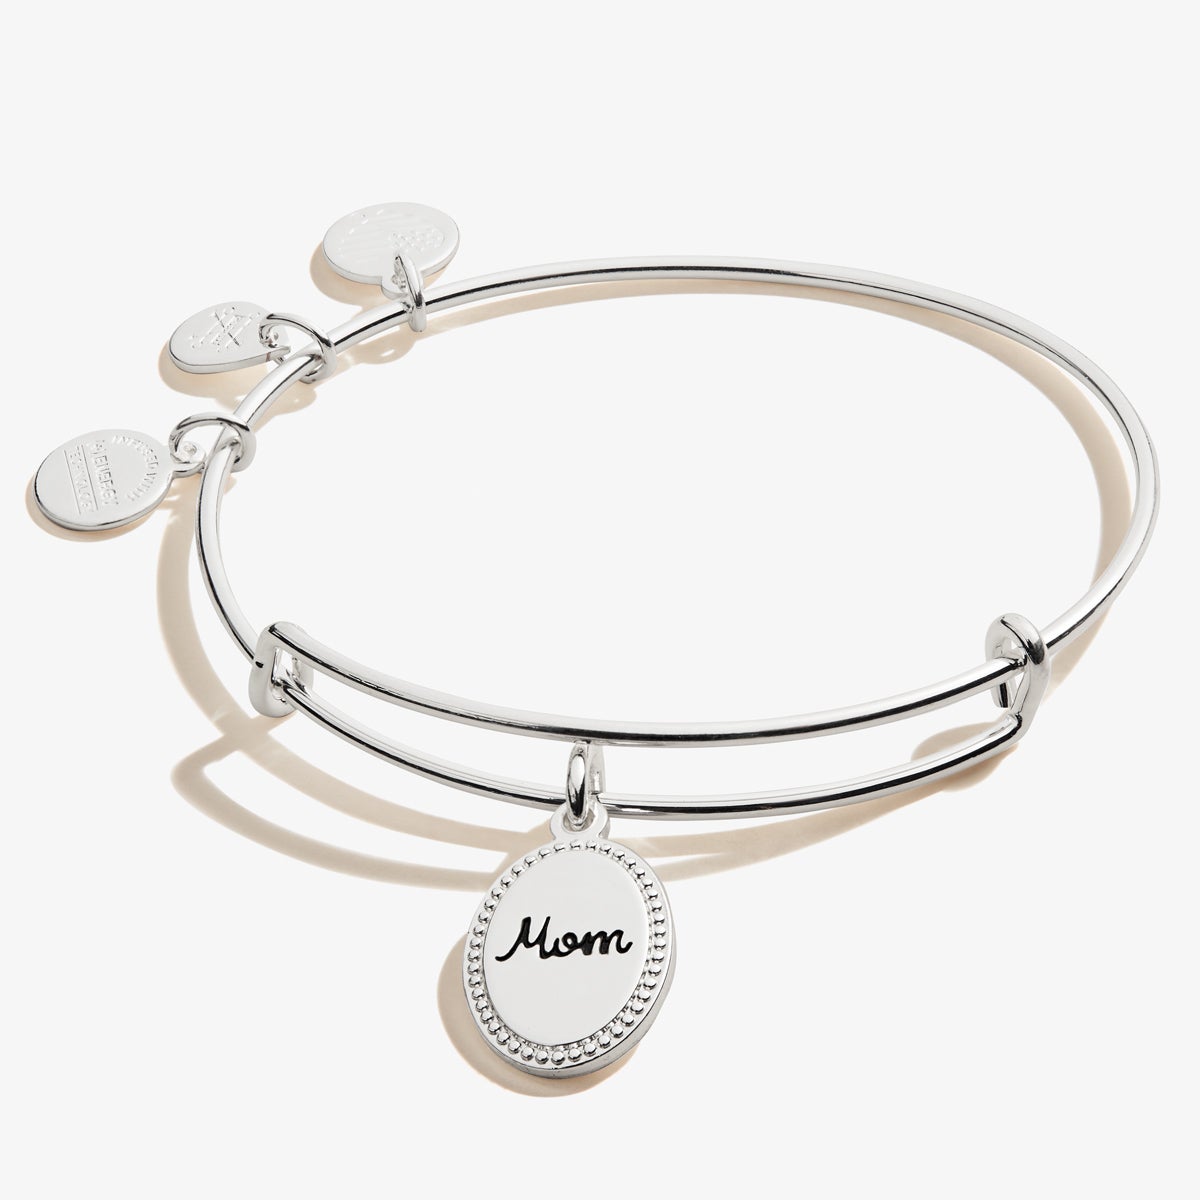 Mom Charm Bangle Bracelet, 'Bonded by Love'